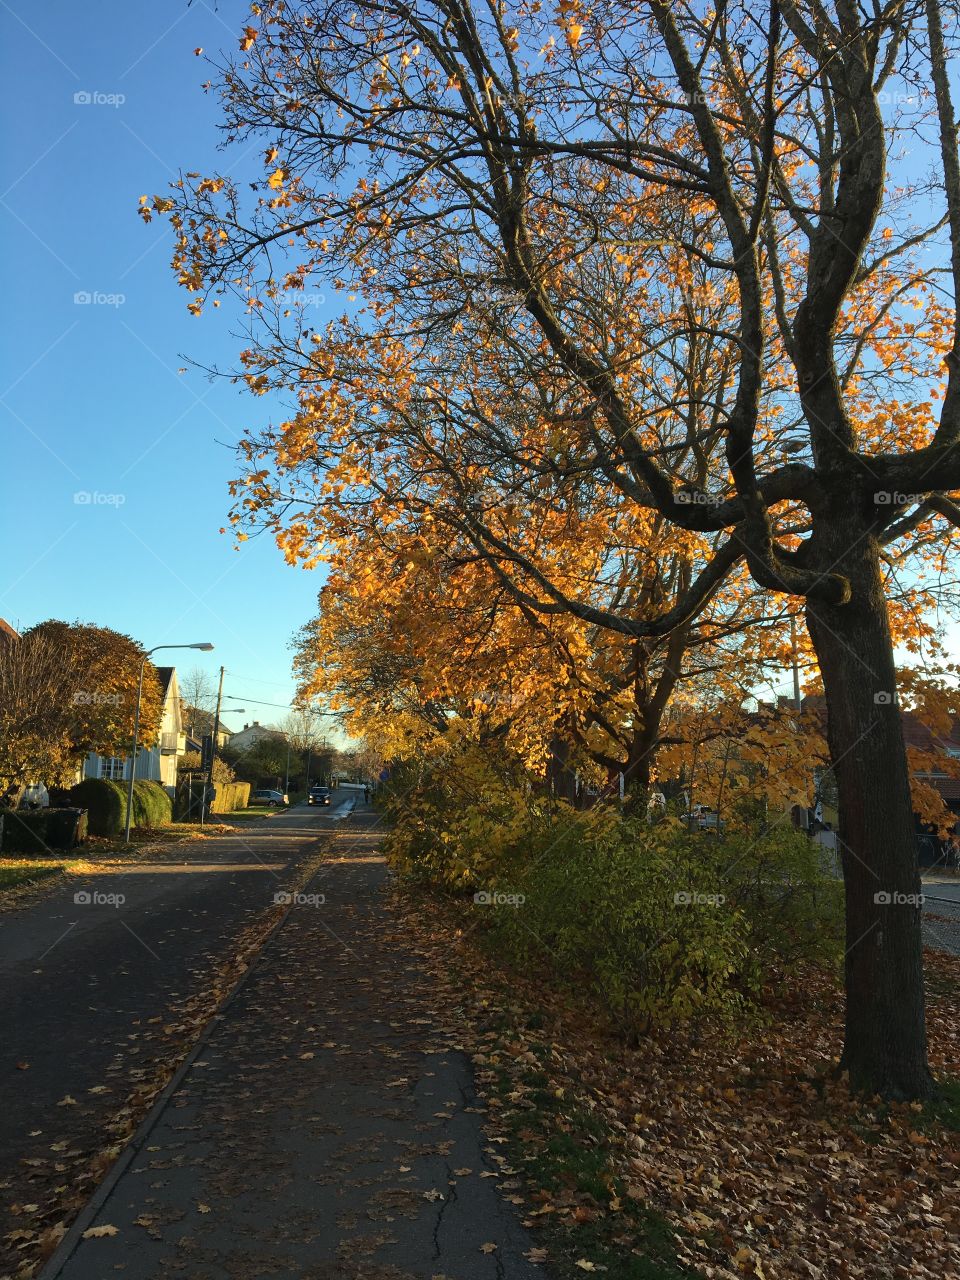 Fall tree in daylight